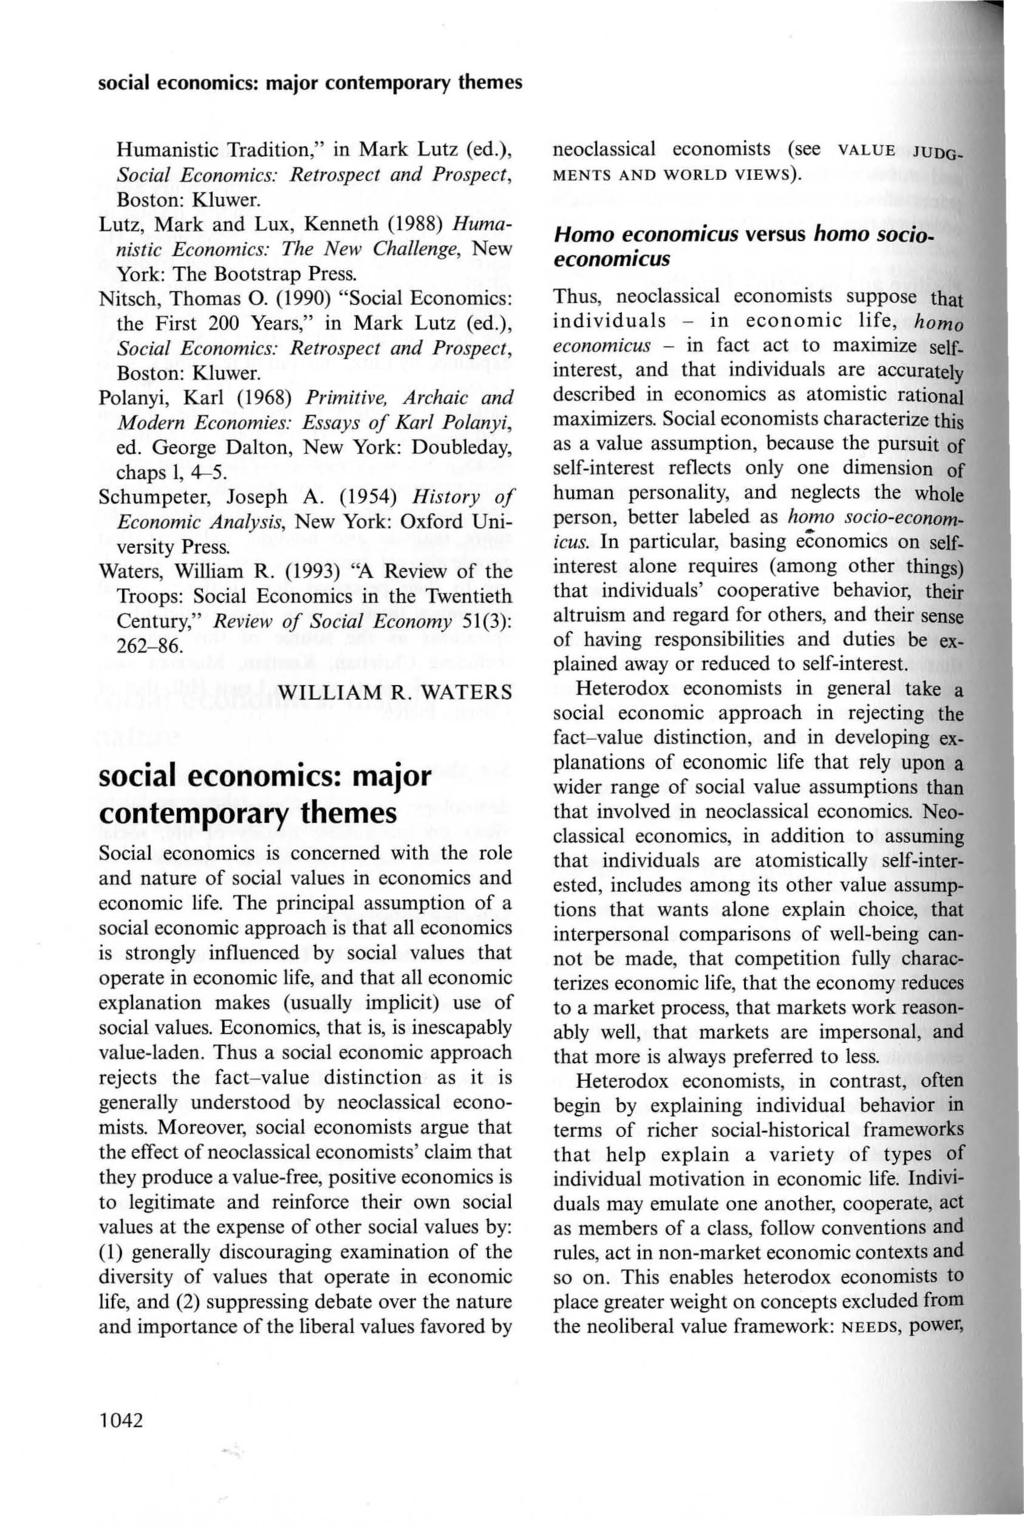 Humanistic Tradition," in Mark Lutz (ed.), Social Economics: Retrospect and Prospect, Boston: Kluwer.